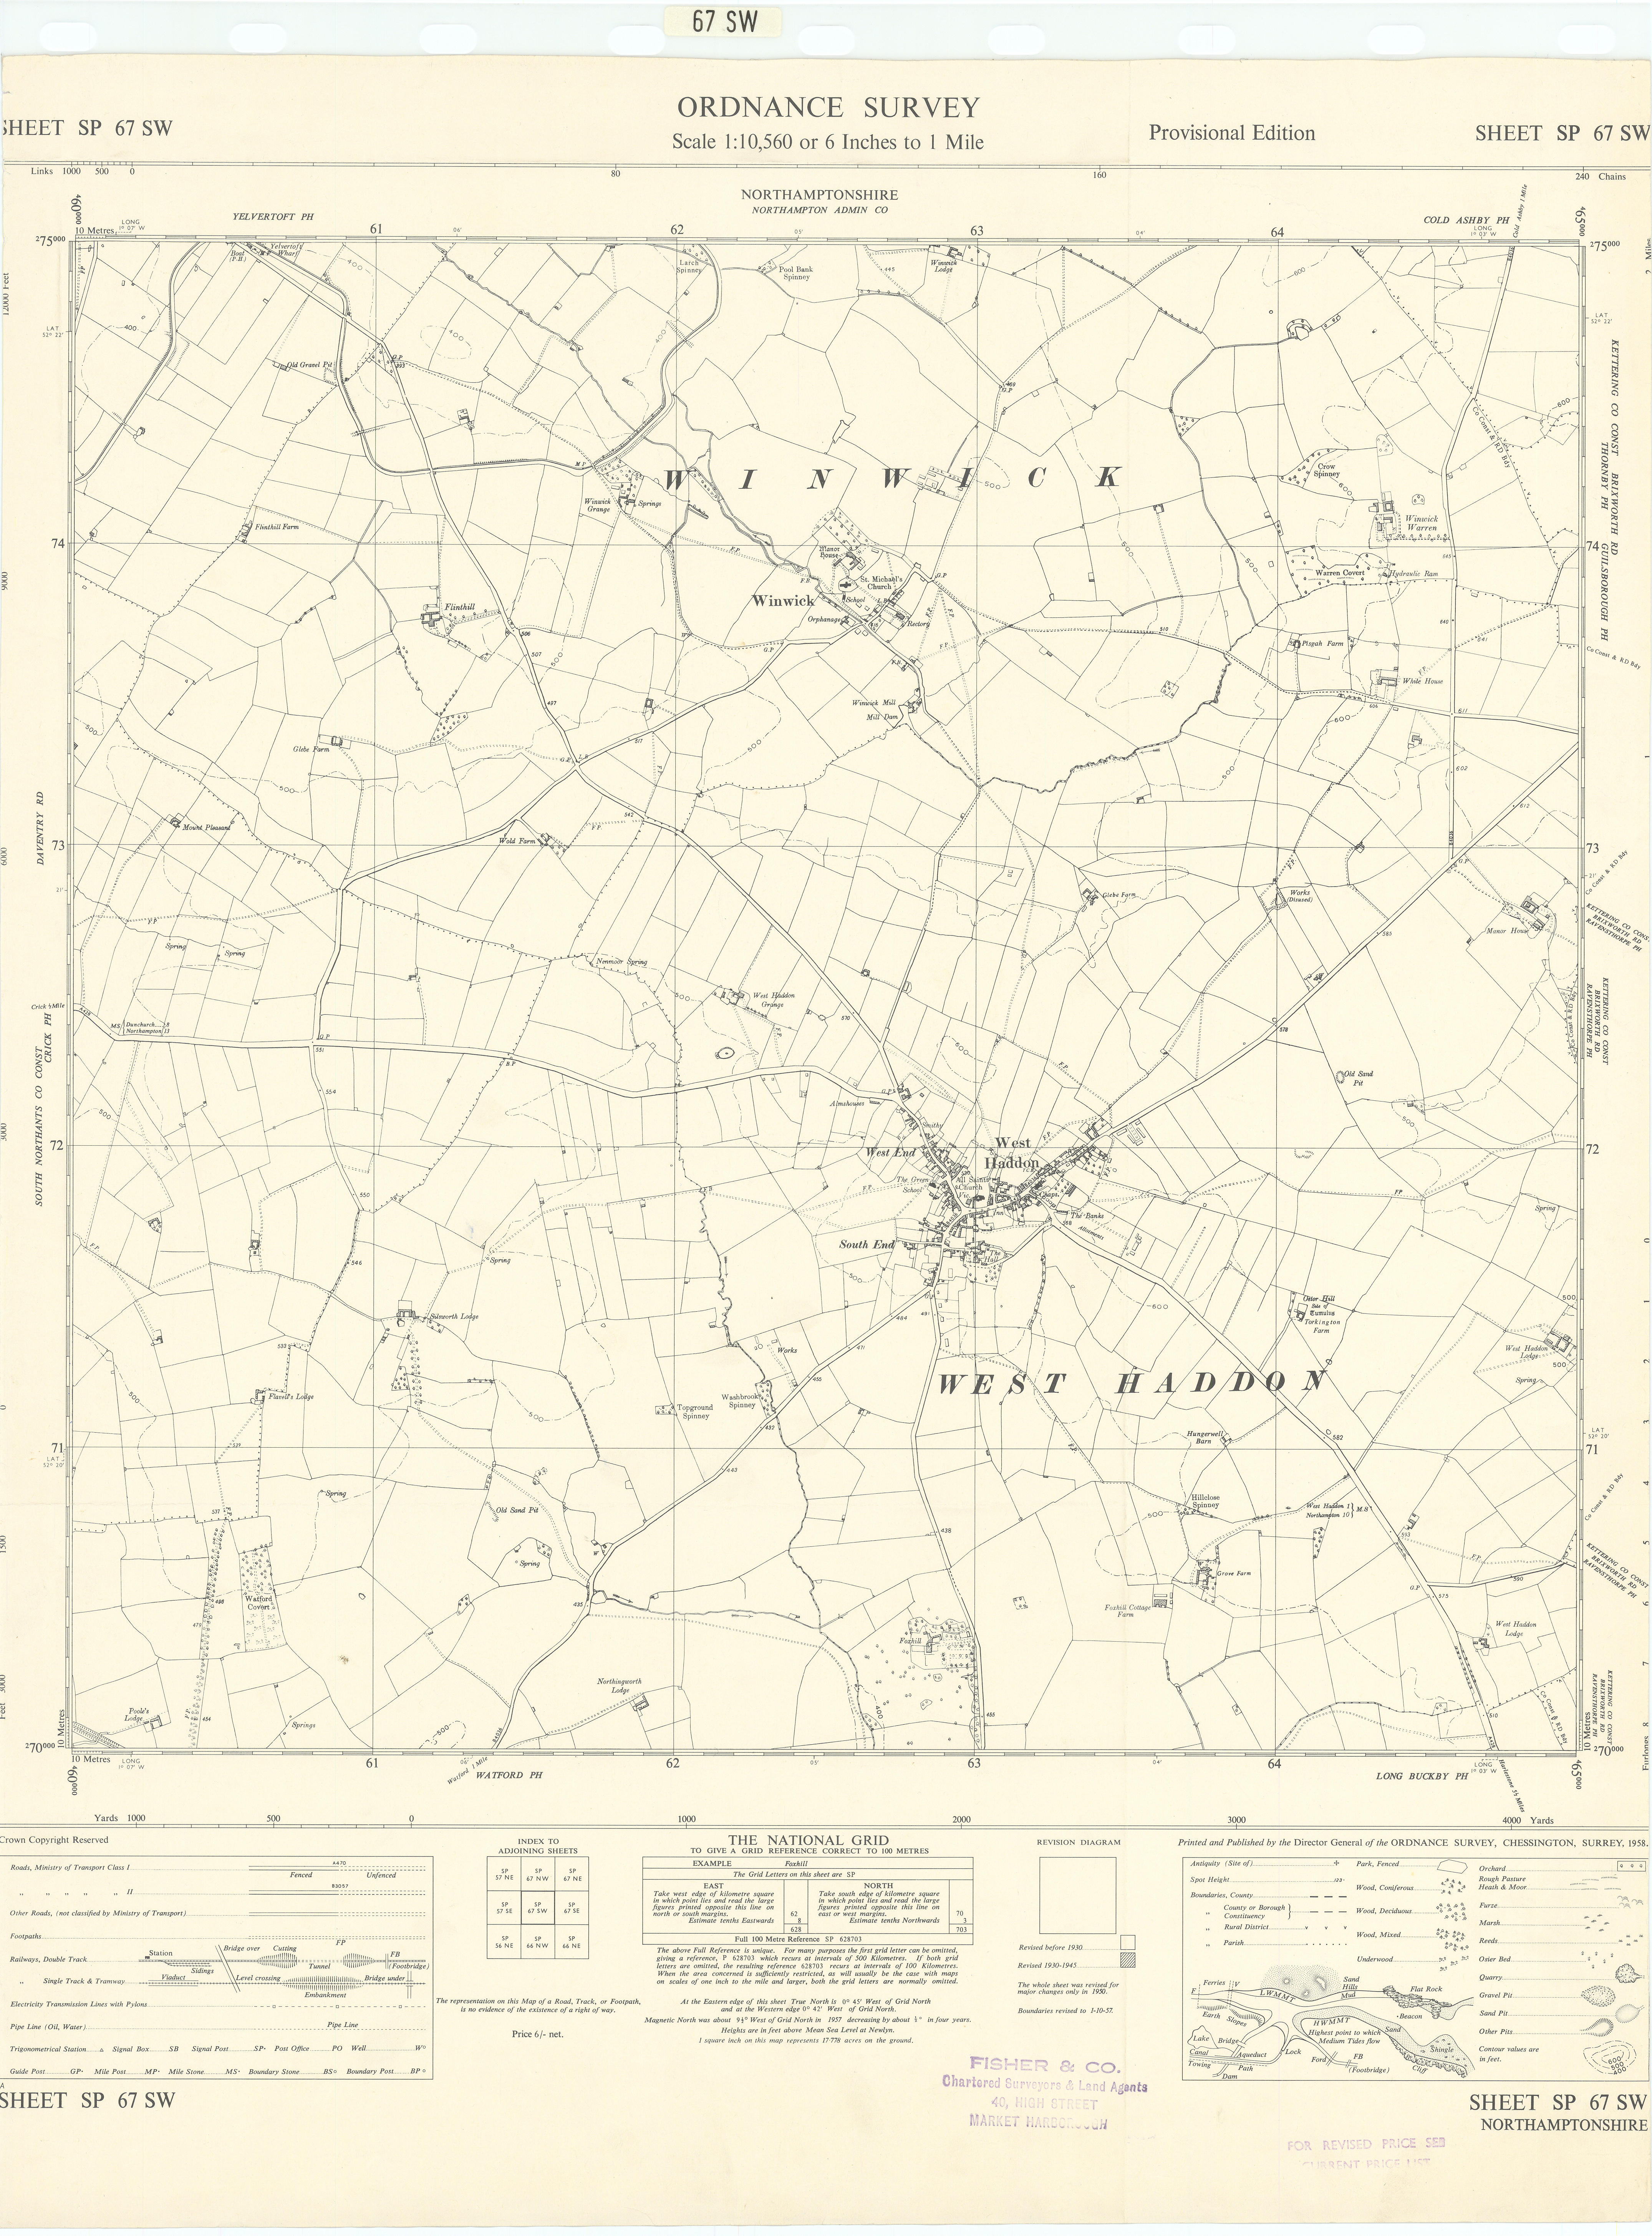 Ordnance Survey Sheet SP67SW Northamptonshire West Haddon Winwick 1958 old map